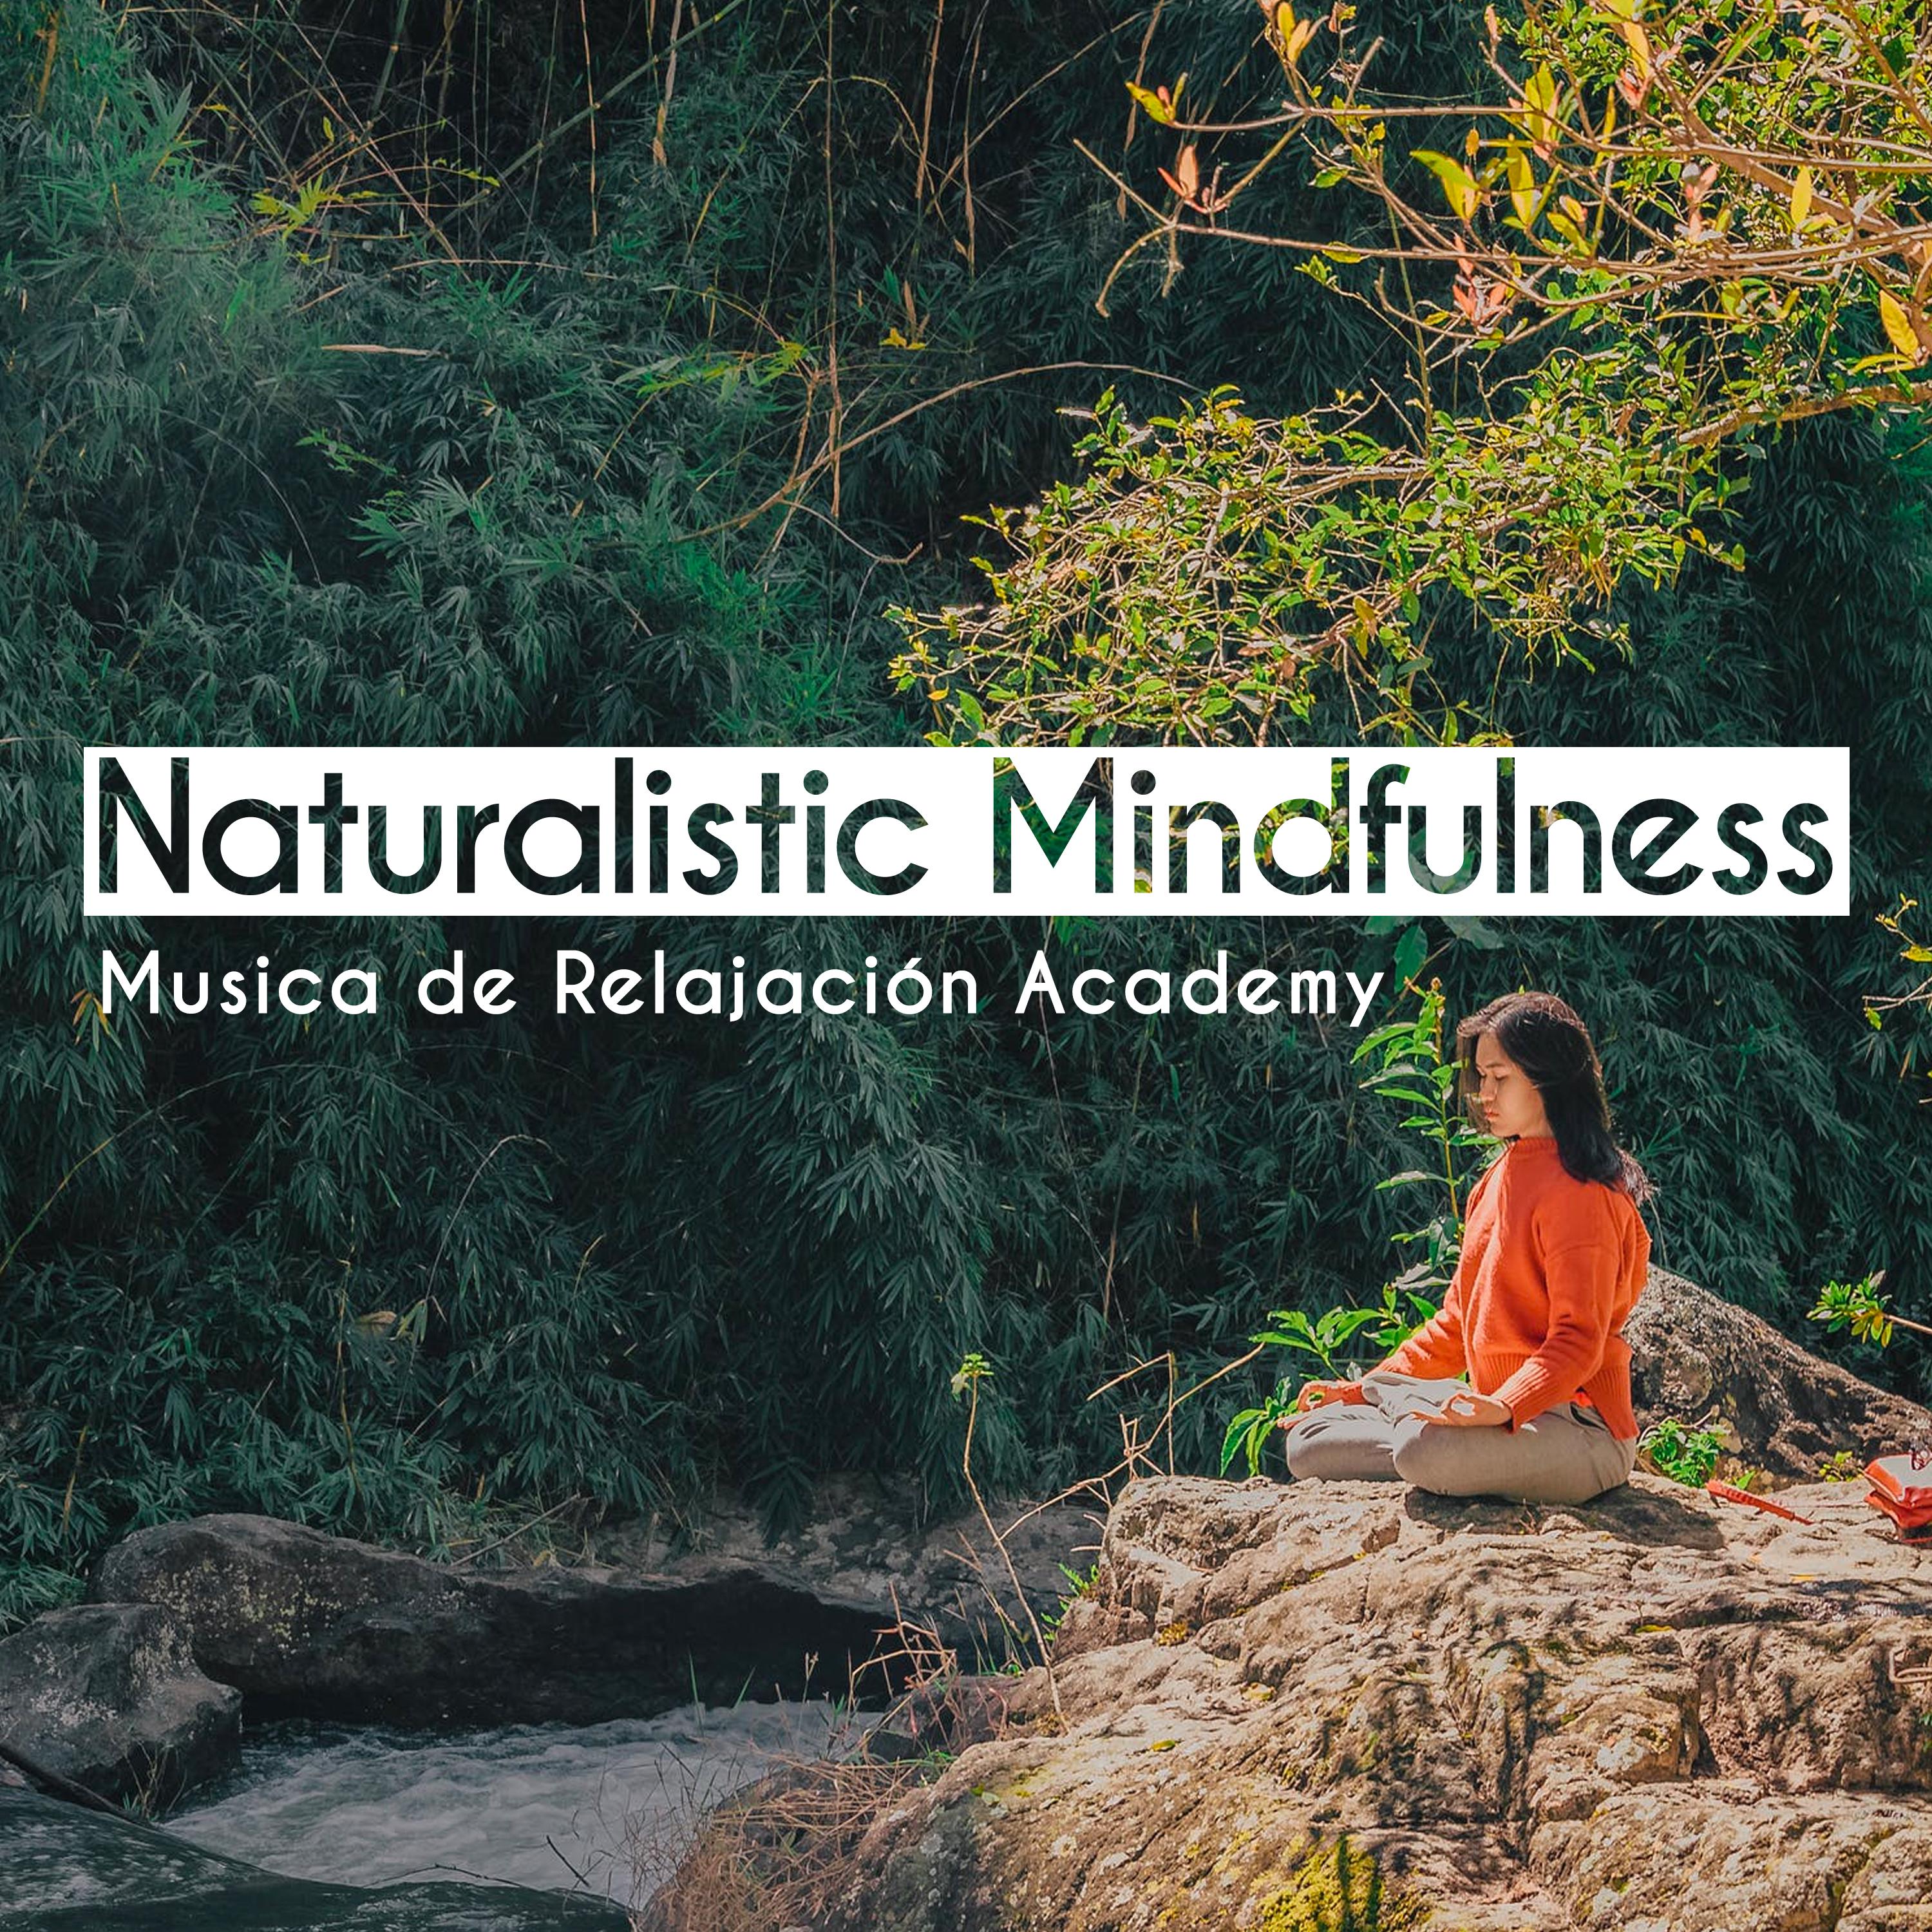 Naturalistic Mindfulness